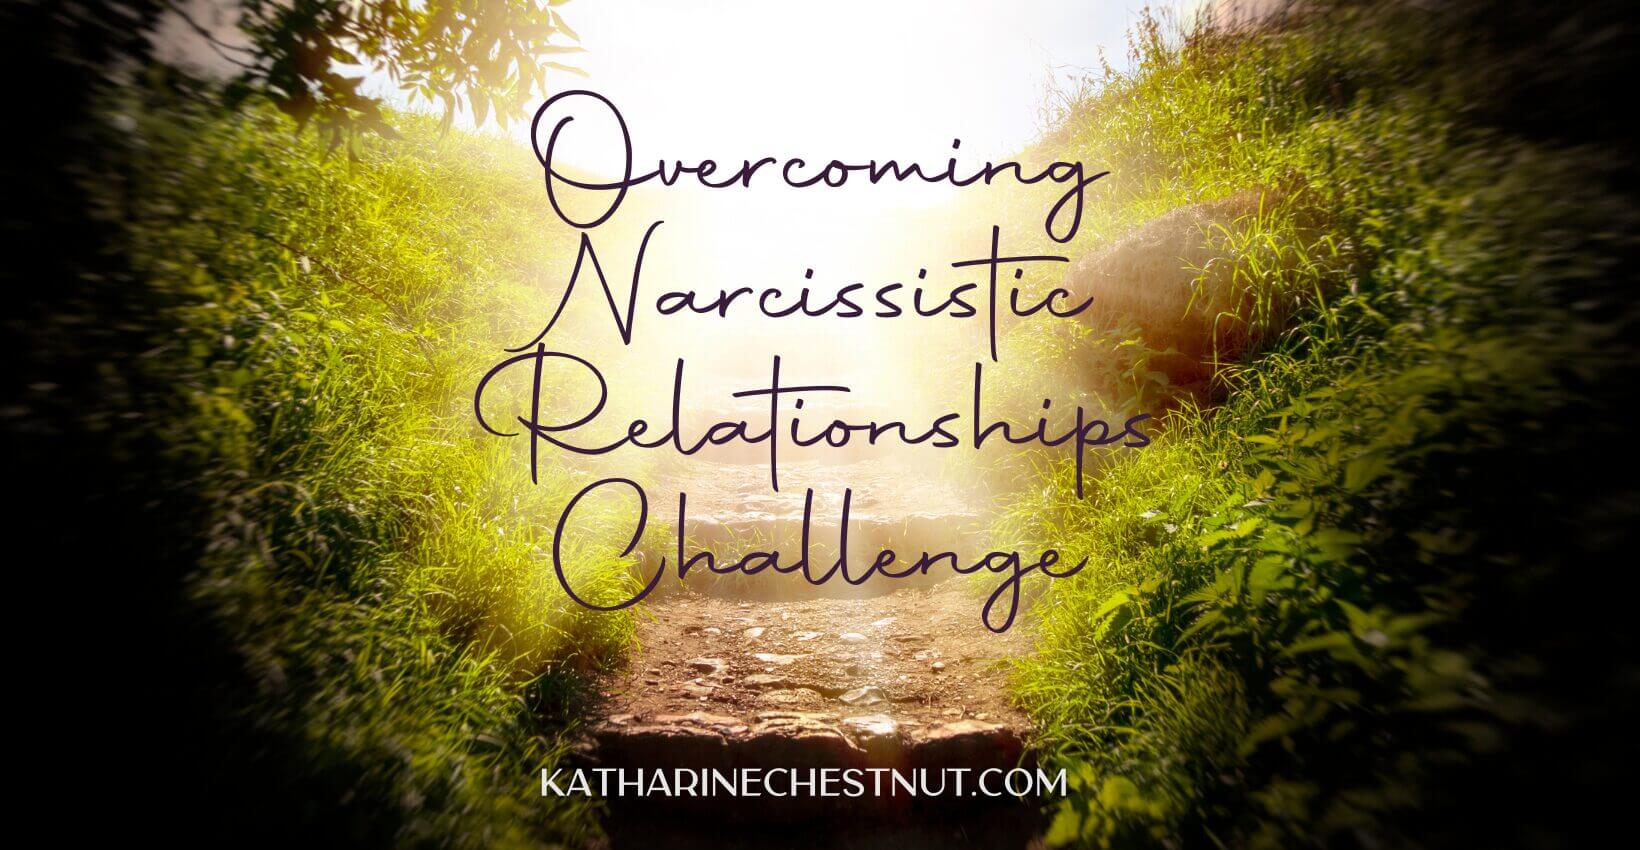 Narcissistic Abuse Challenge | Katharine Chestnut